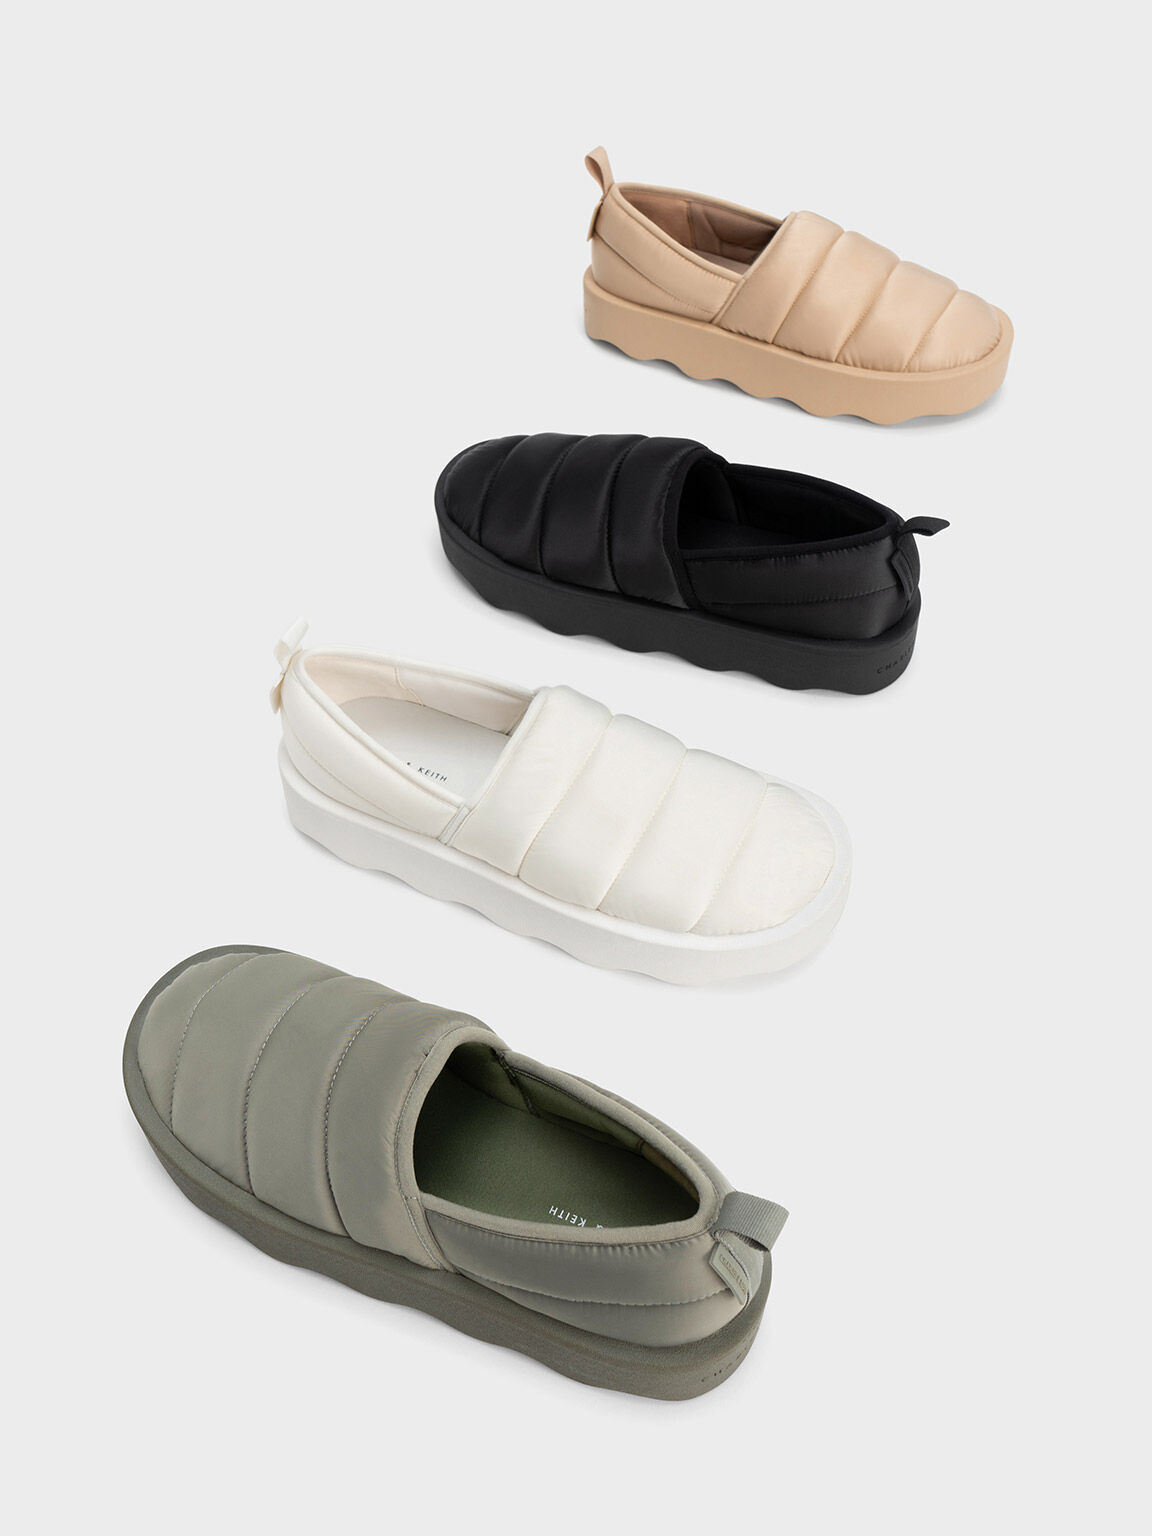 Sepatu Loafers Puffy Nylon Panelled, Black, hi-res